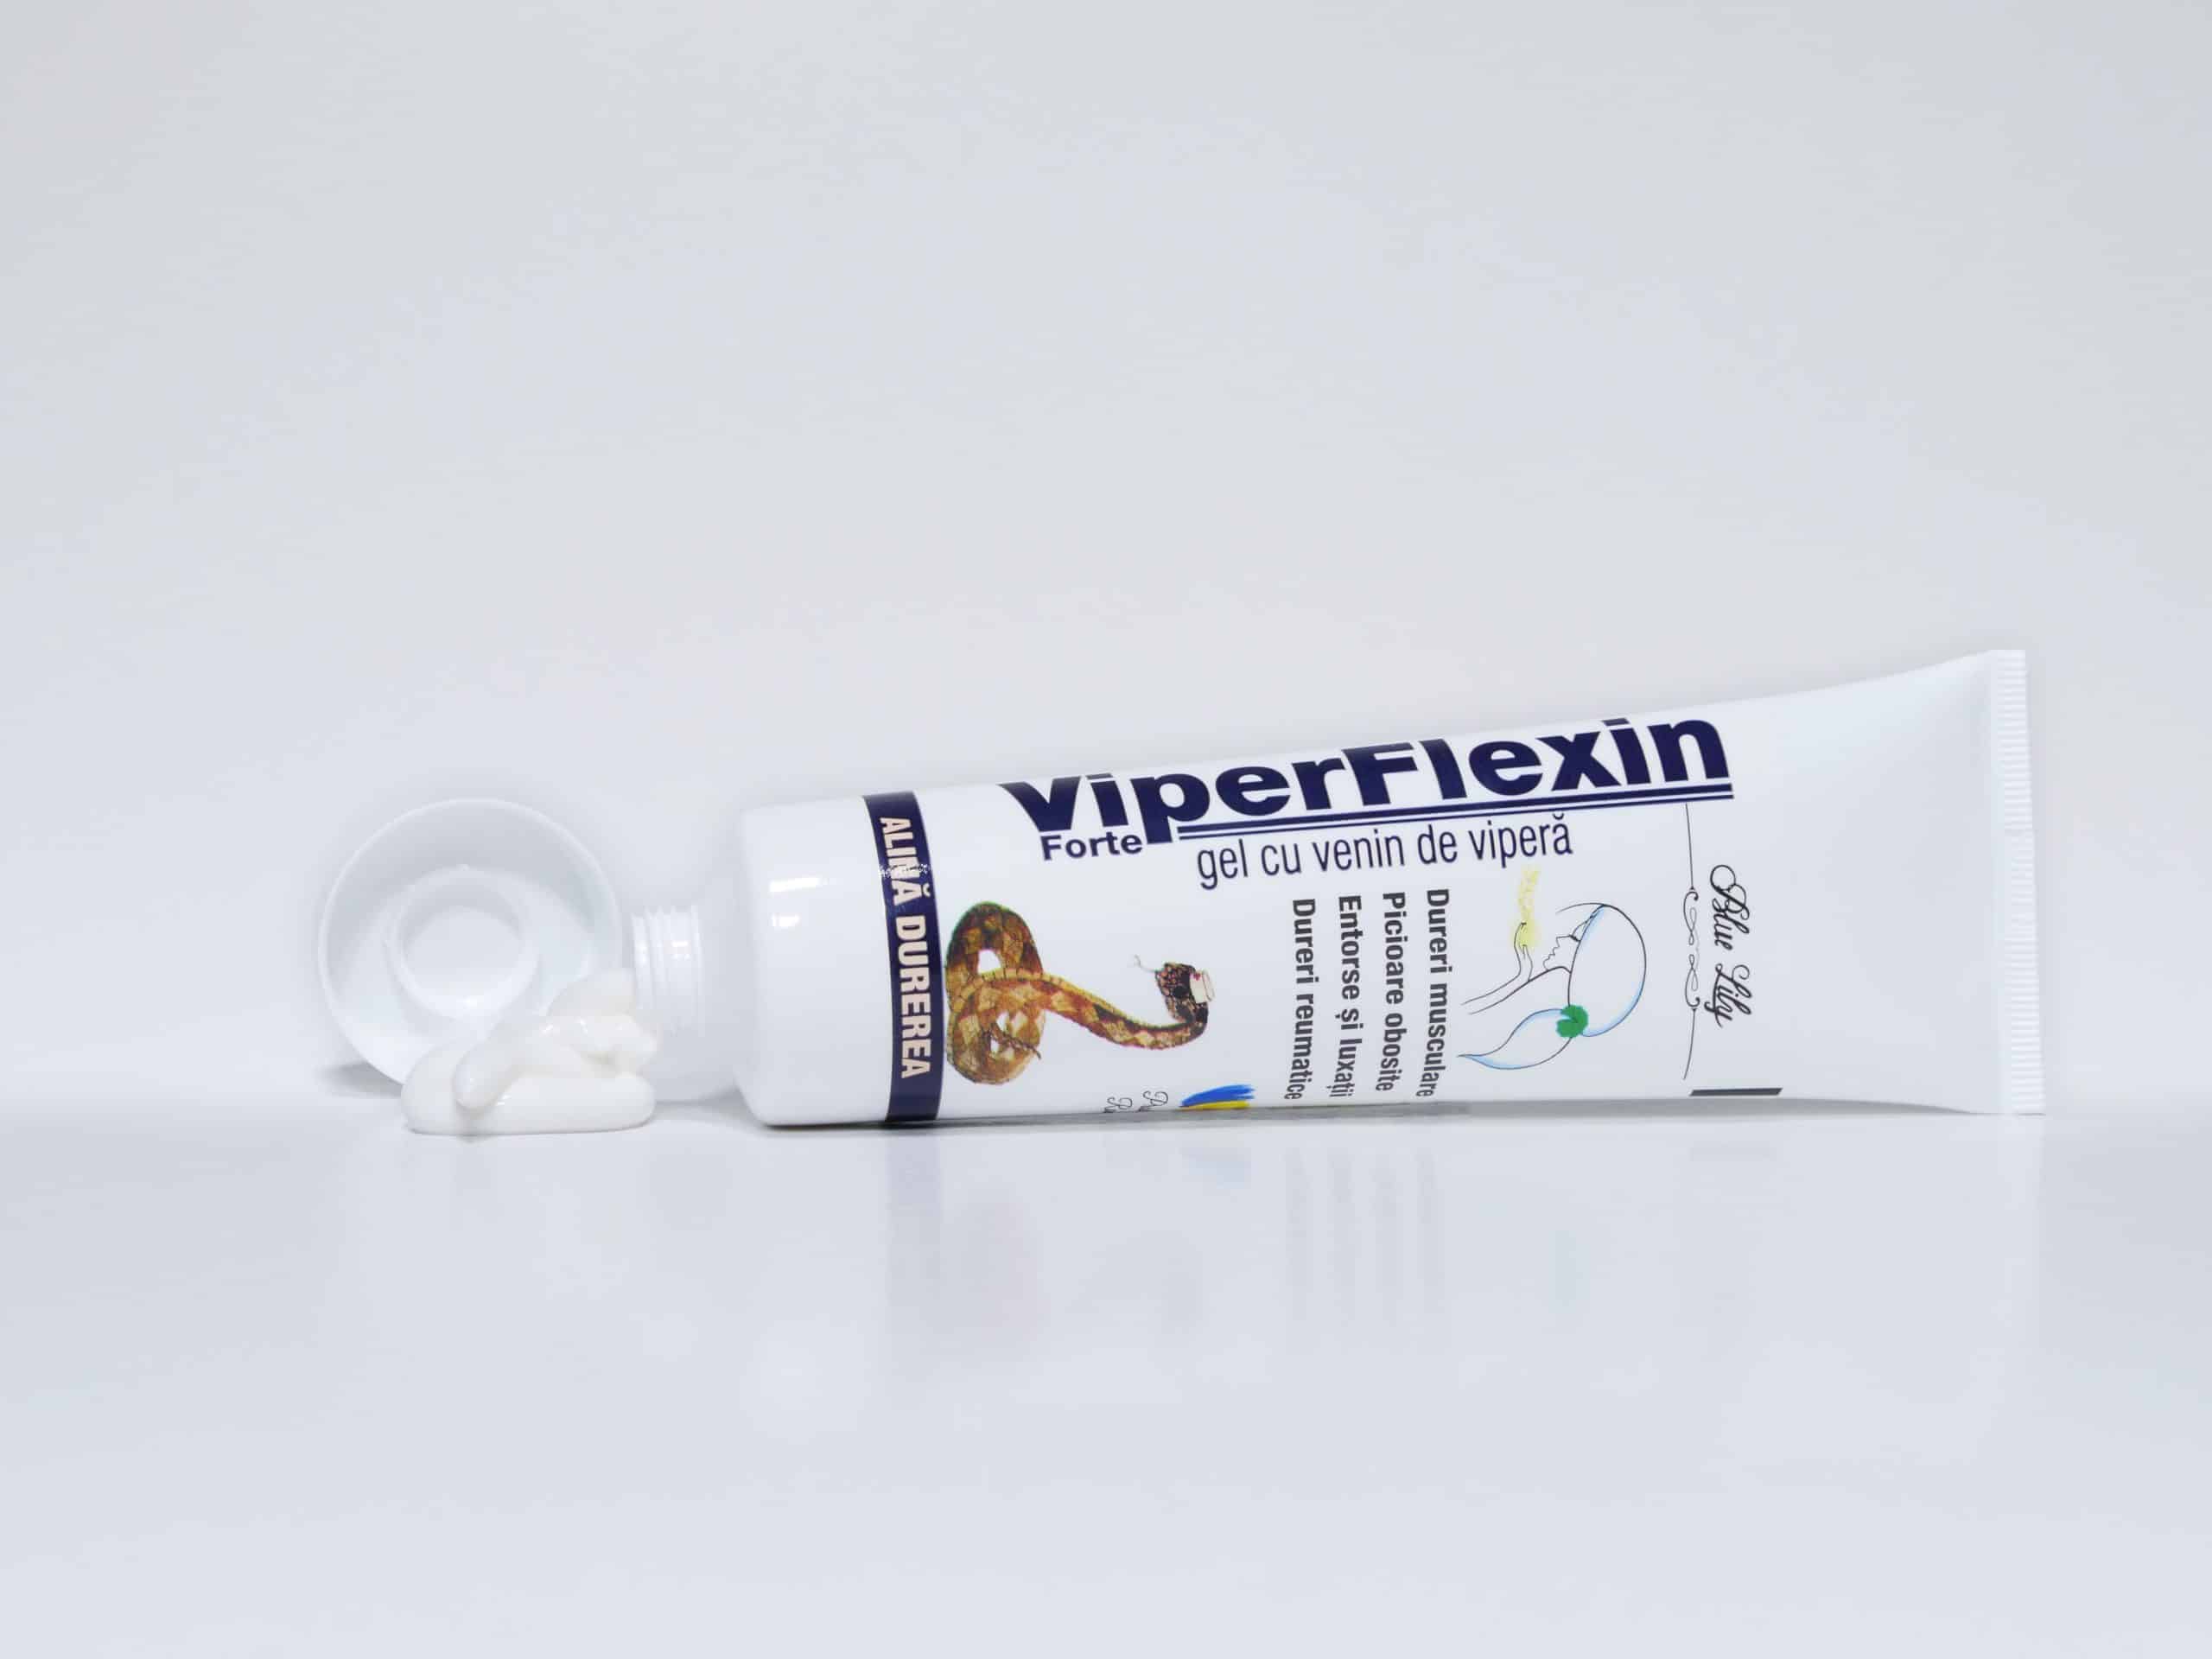 (P) Viperflexin, gelul din venin de vipera care te scapa de durere